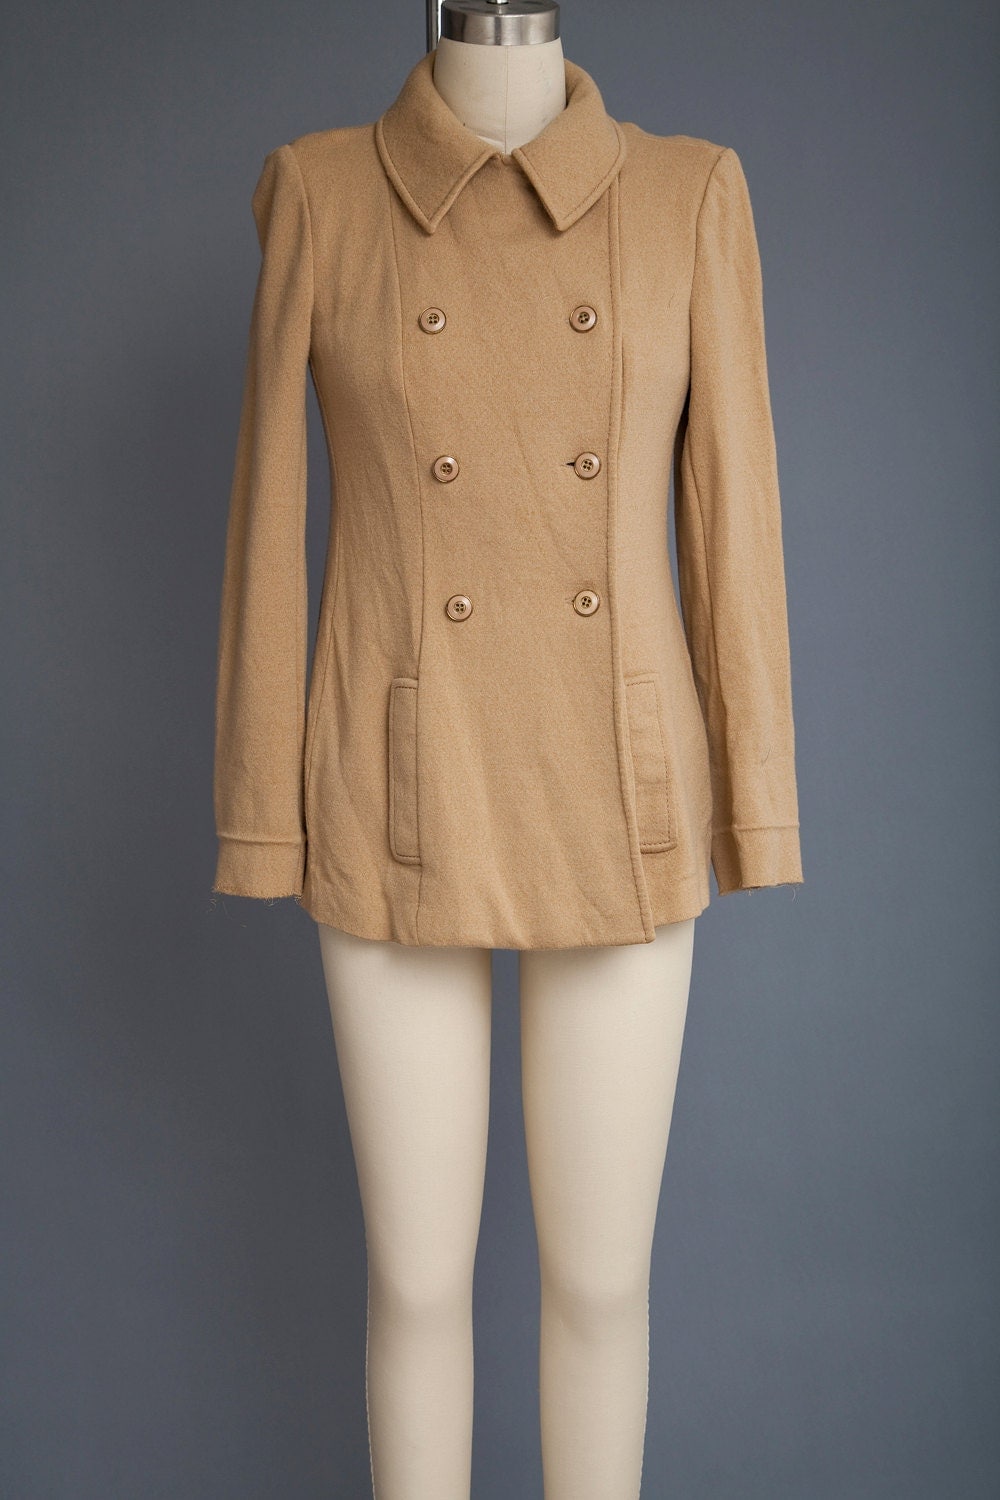 camel coat jacket vintage 70s fitted laine wool knit light